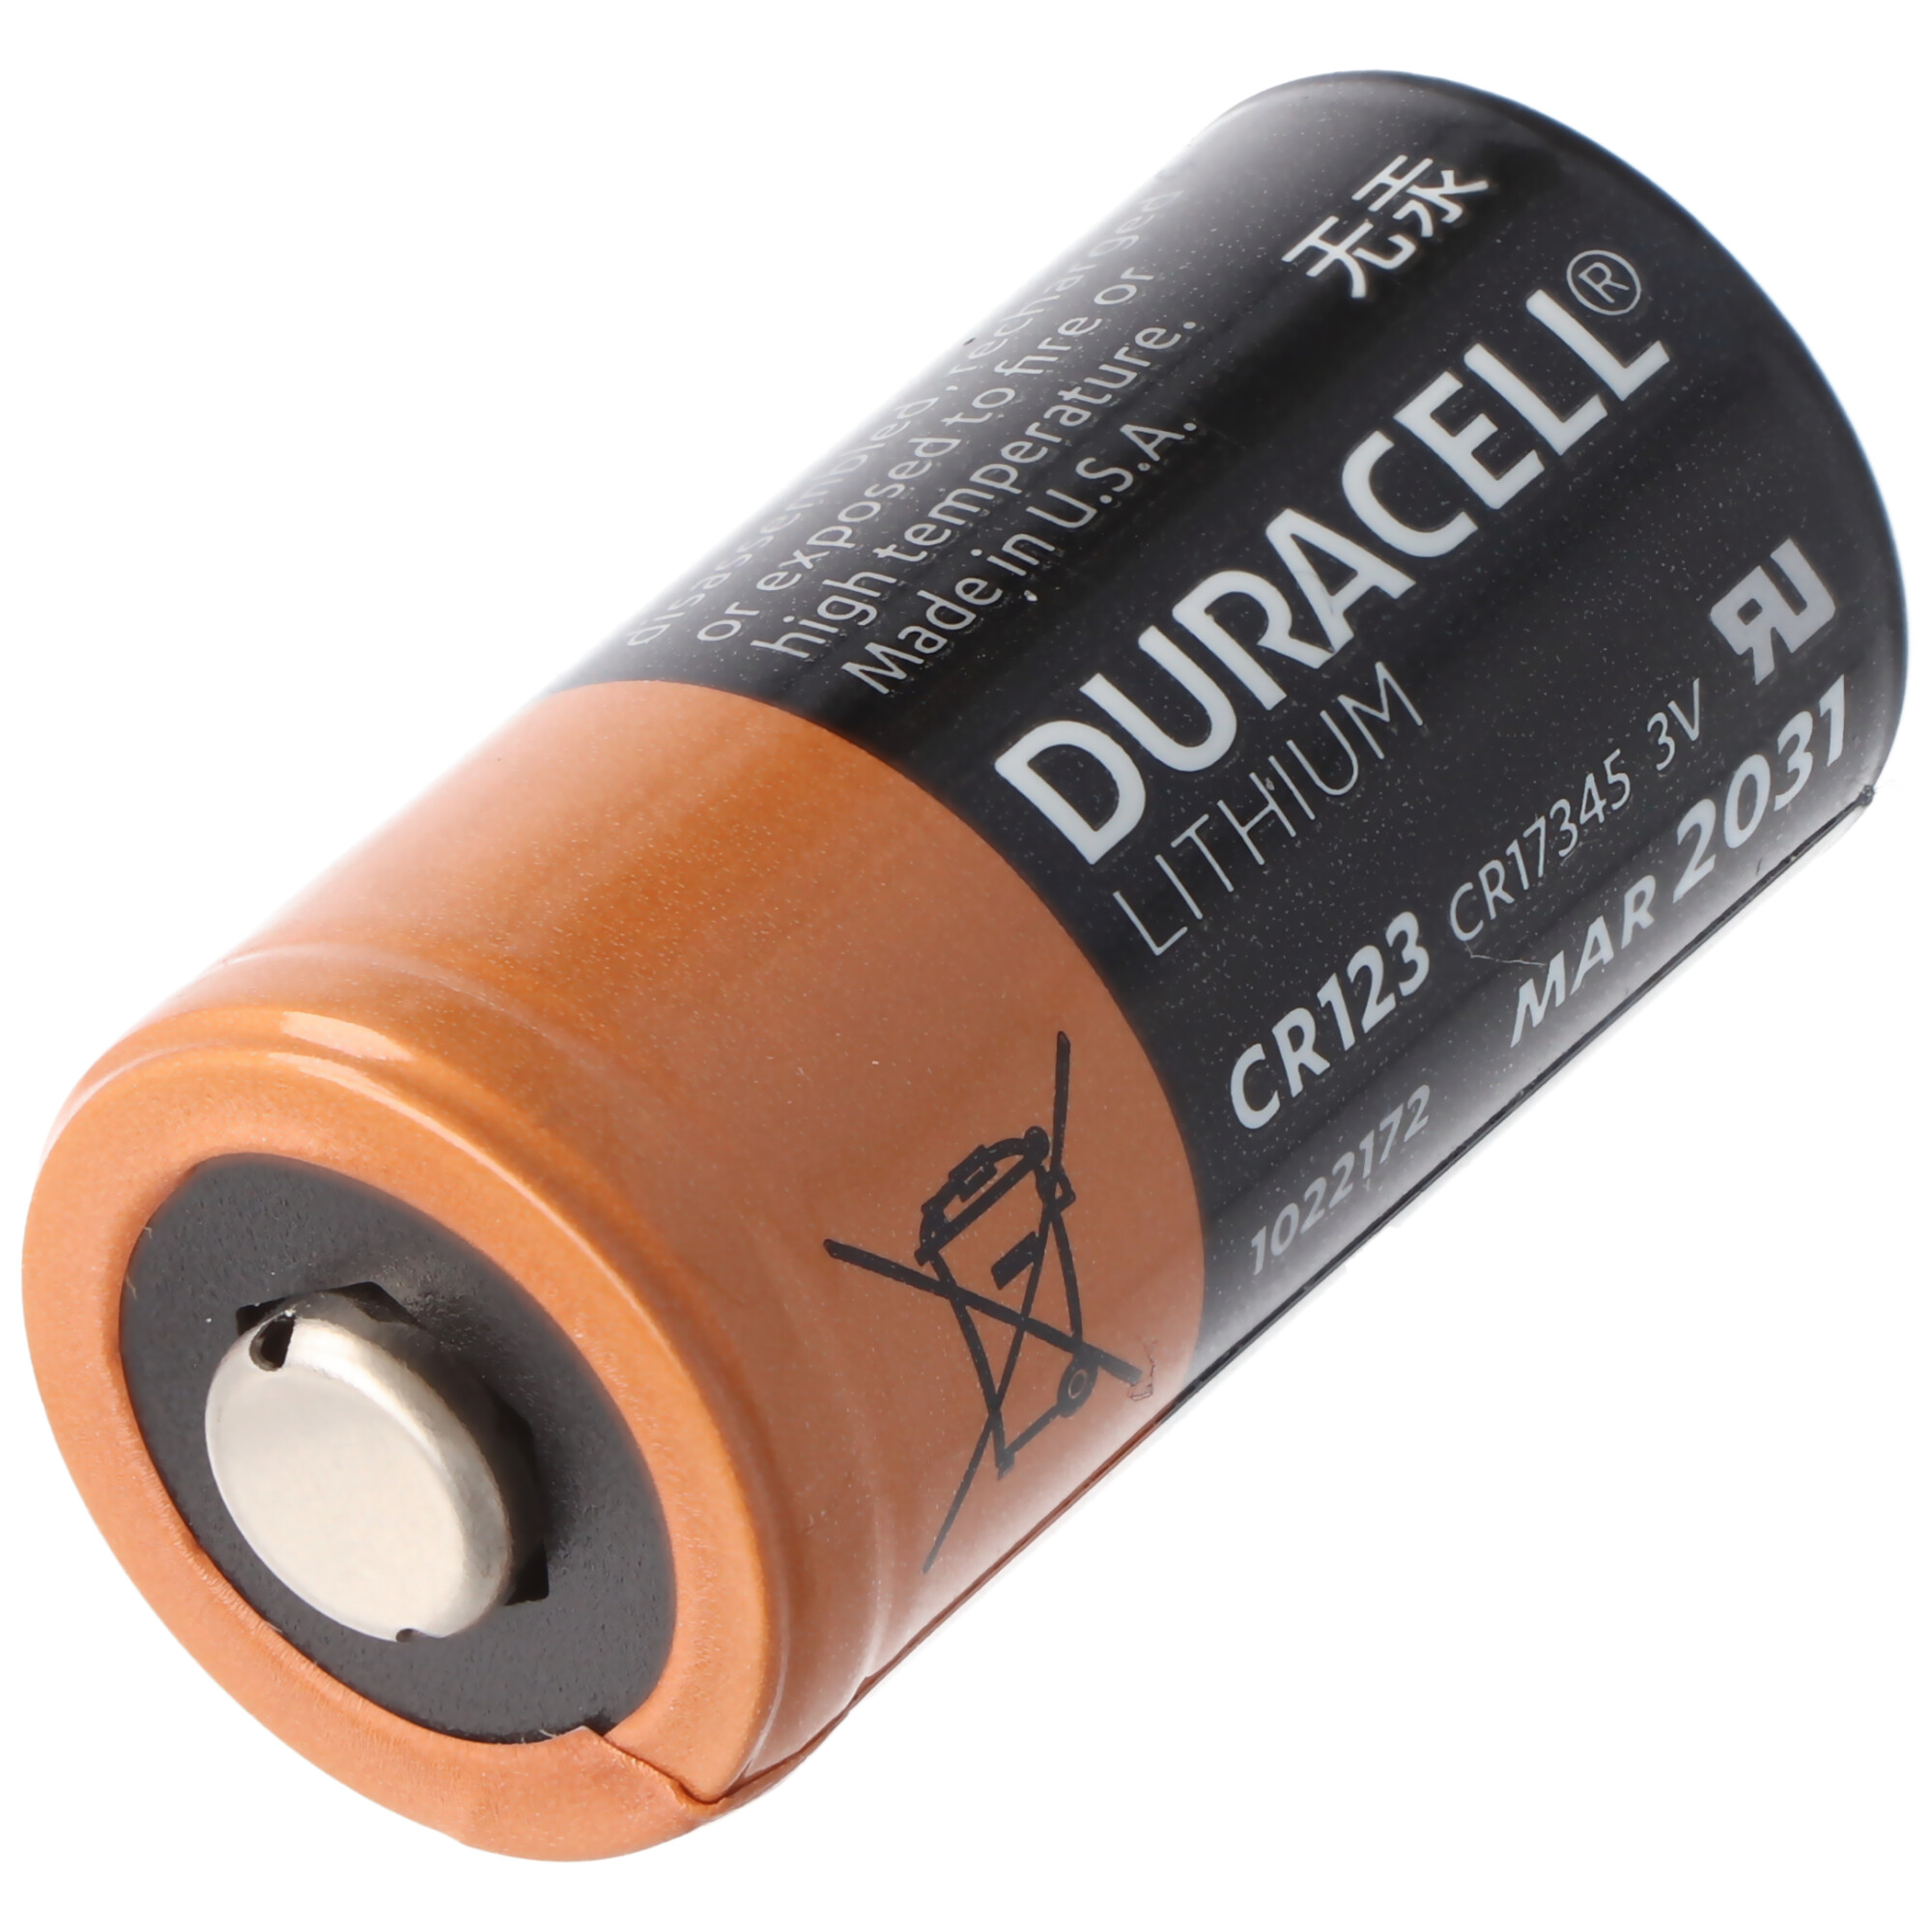 DURACELL DURACELL Lithium-Batterie Batterie Bulk 3V, CR123A, Ultra Photo, Lithium